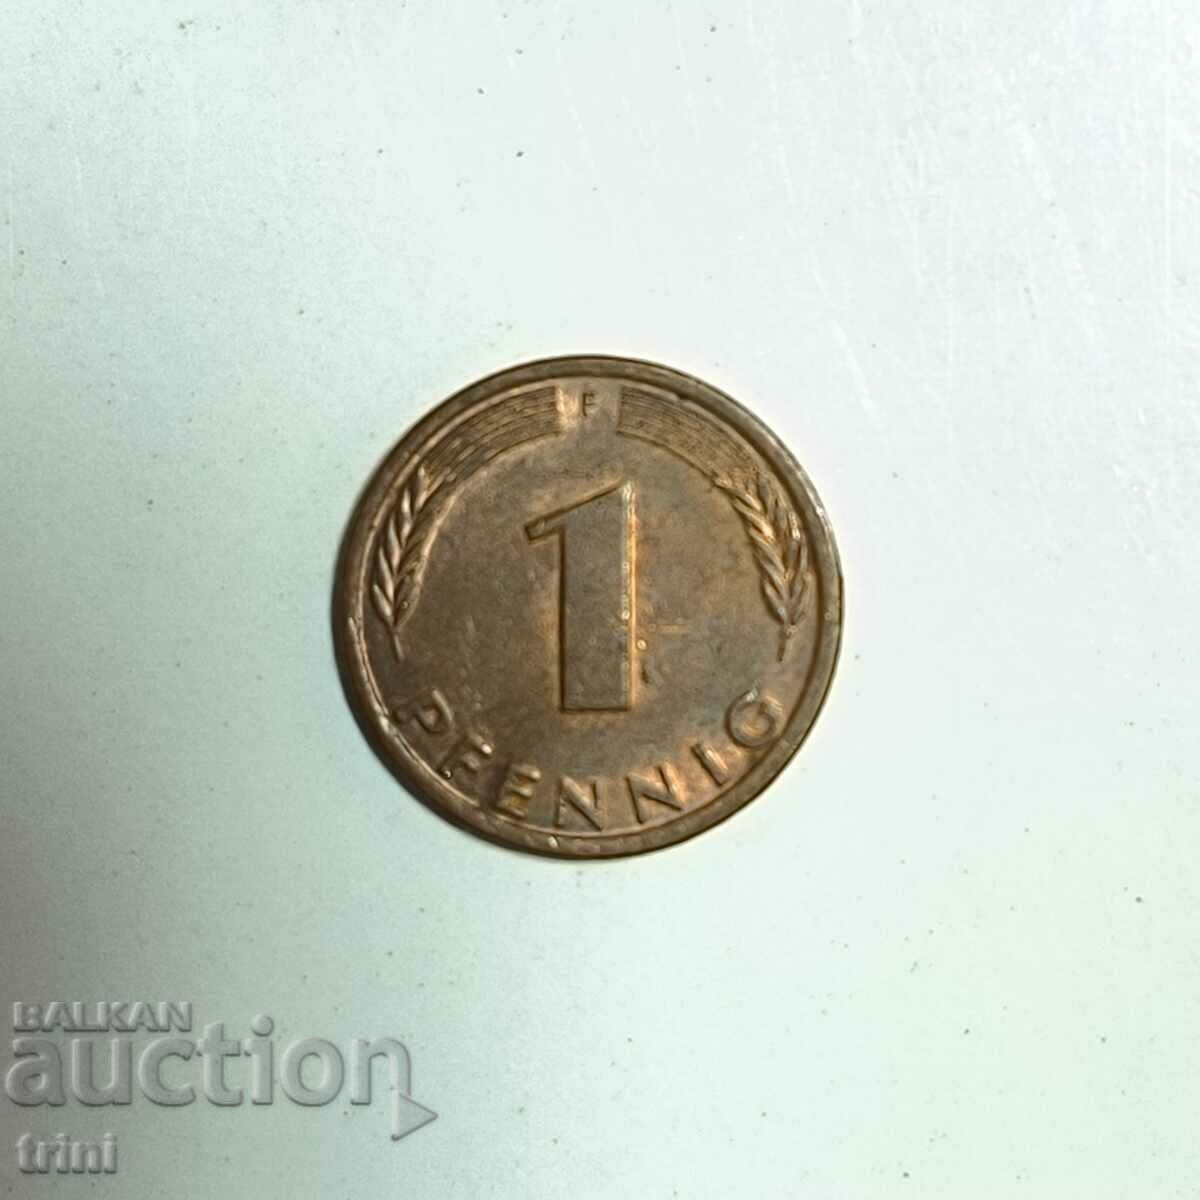 Germany 1 pfennig 1981 year 'F' - Stuttgart e187